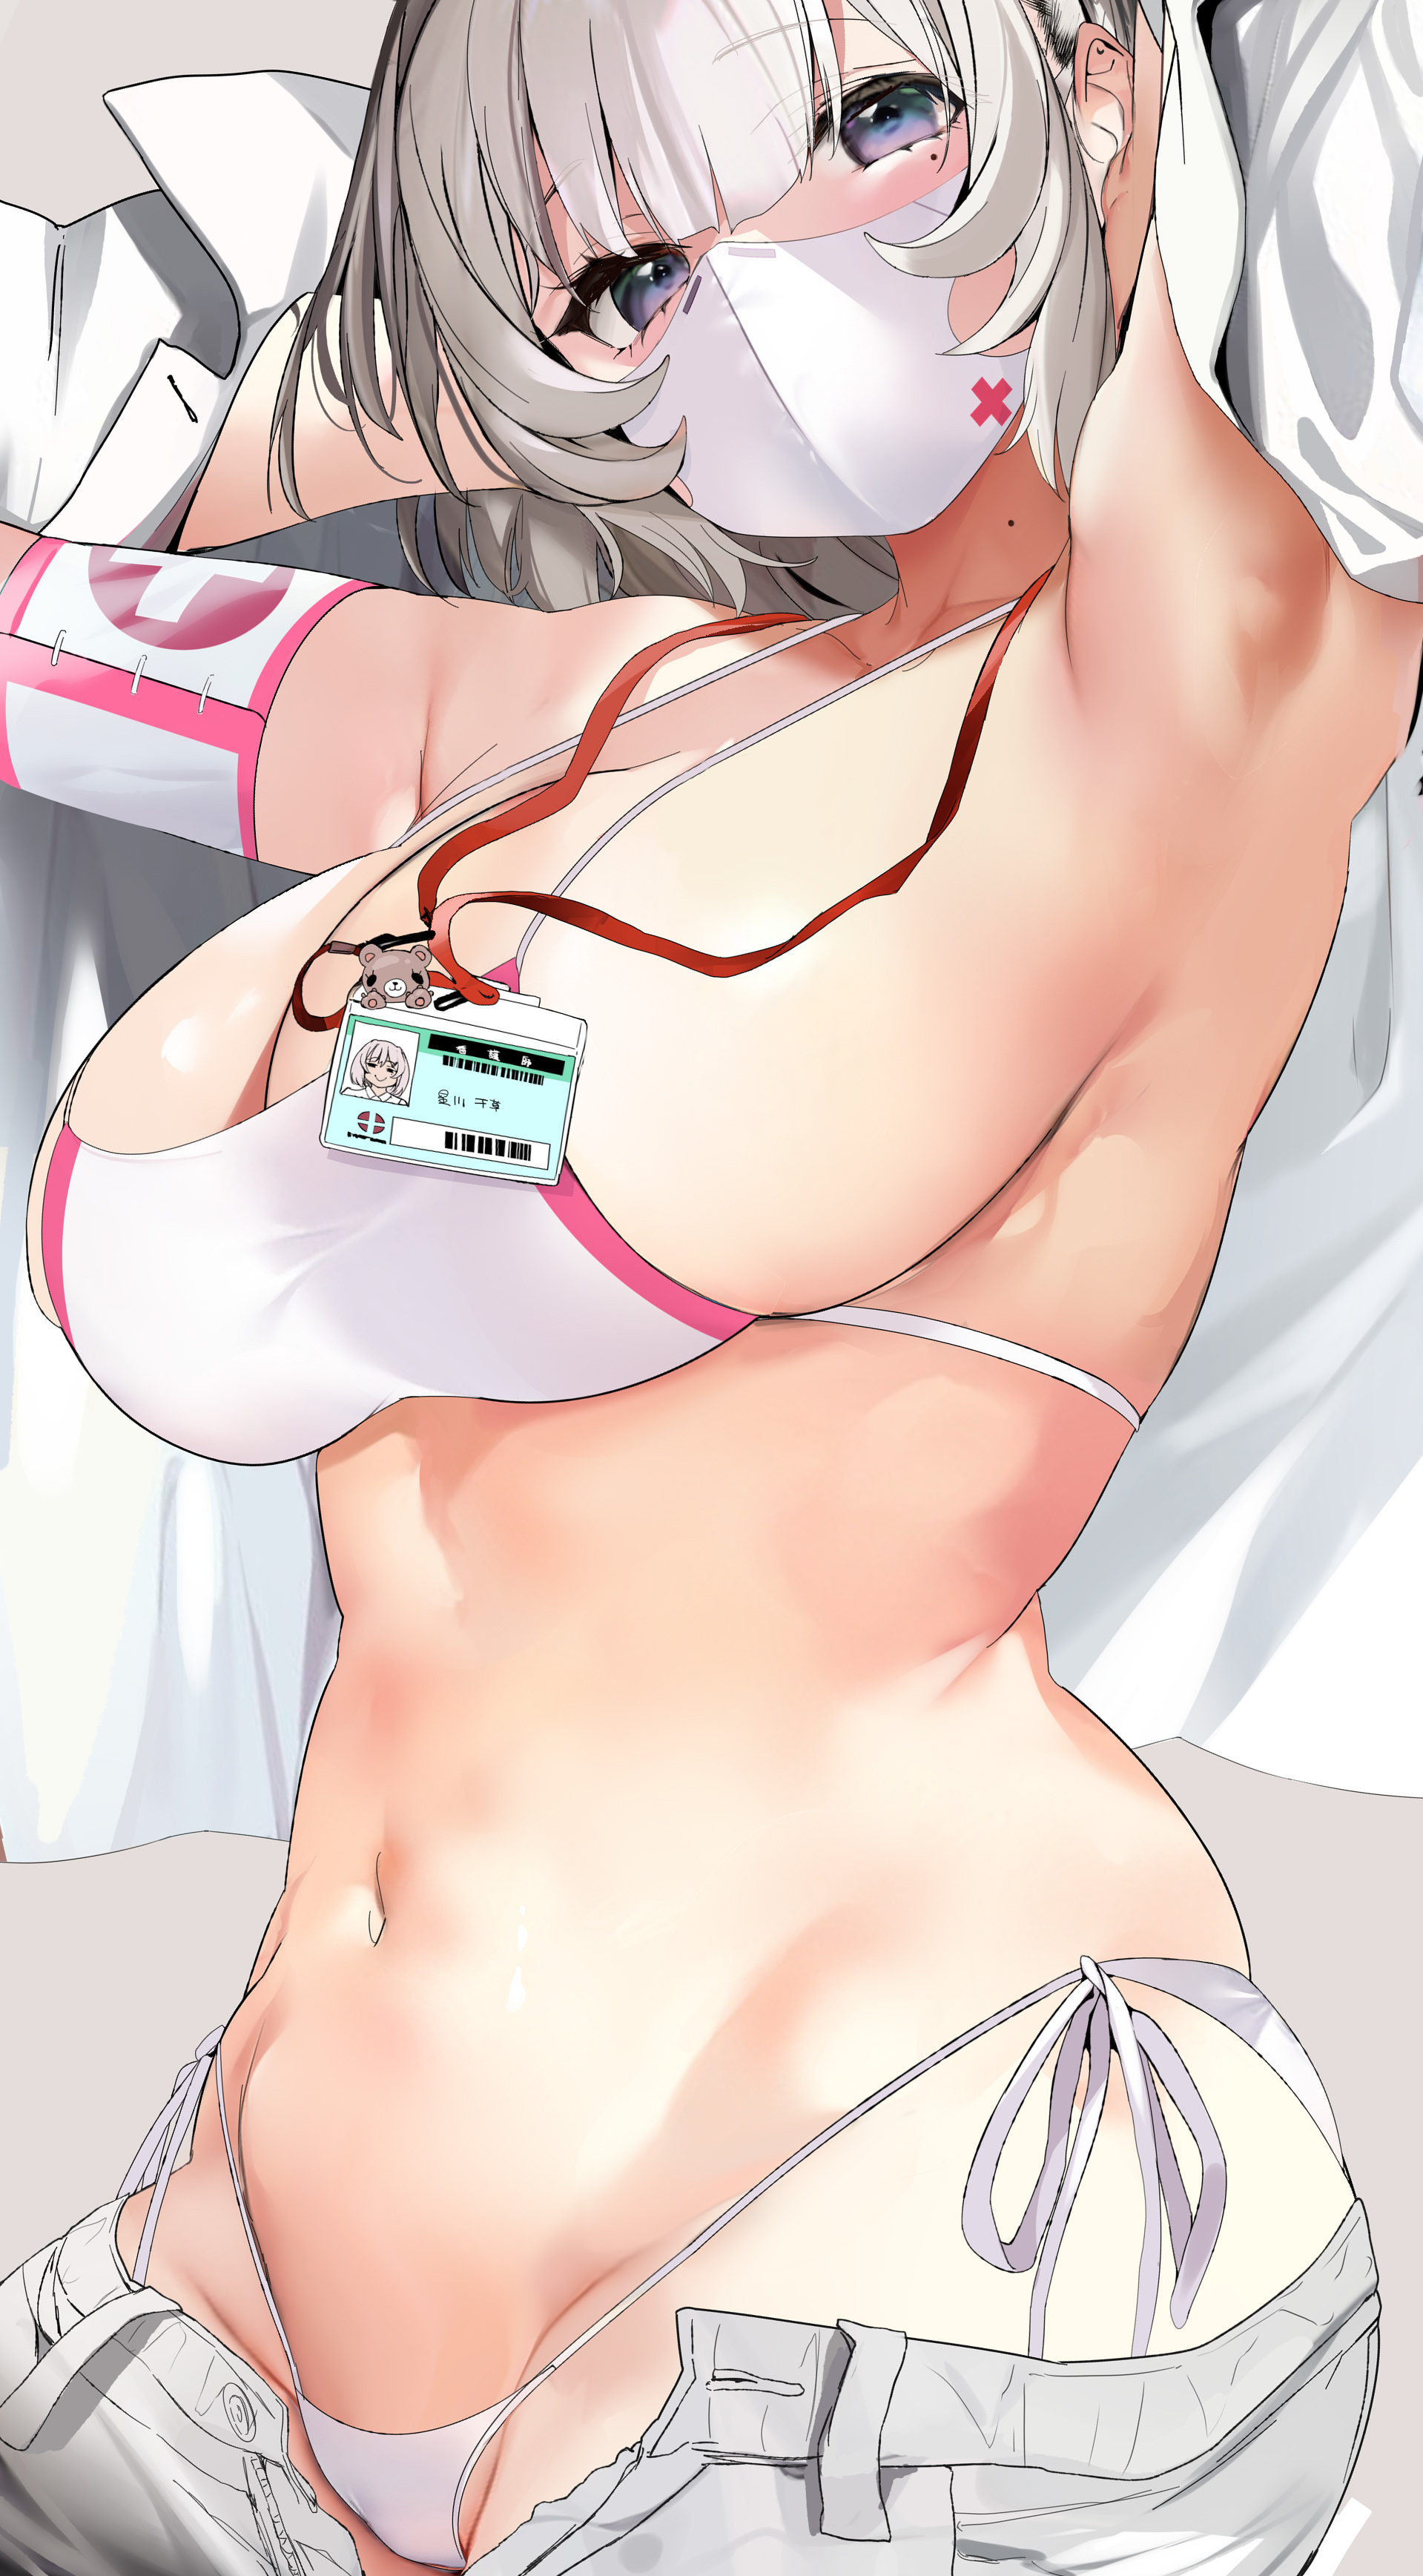 Anime 1919x3473 anime anime girls Marushin silver hair mask nurse outfit bikini sideboob big boobs armpits belly